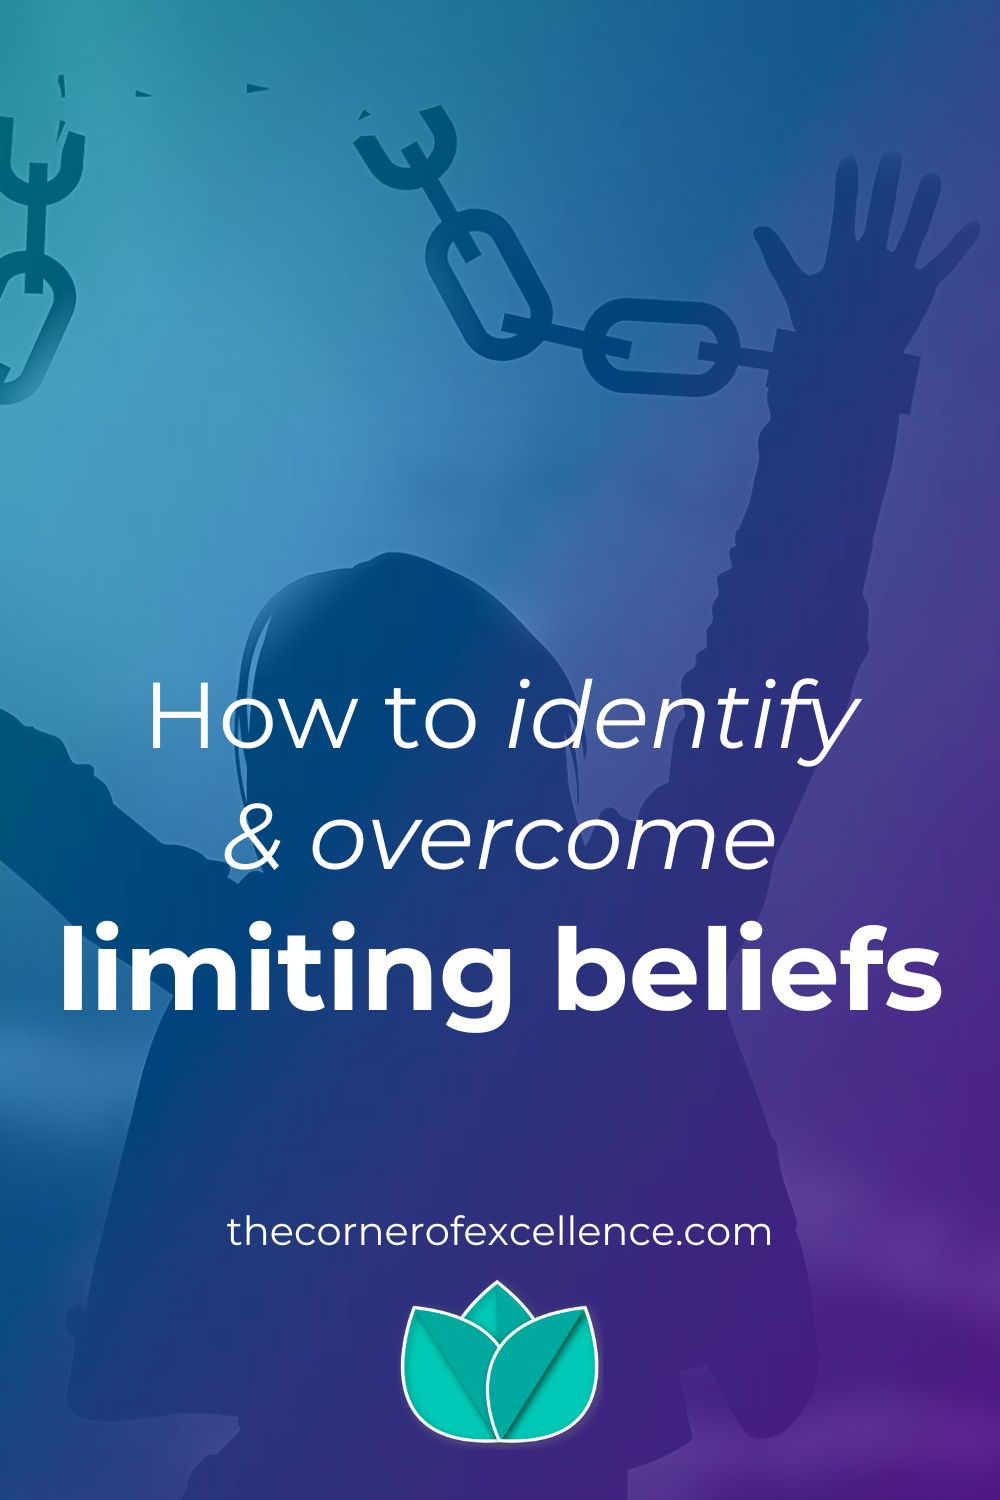 identify limiting beliefs overcome limiting beliefs limiting belief freedom break chains